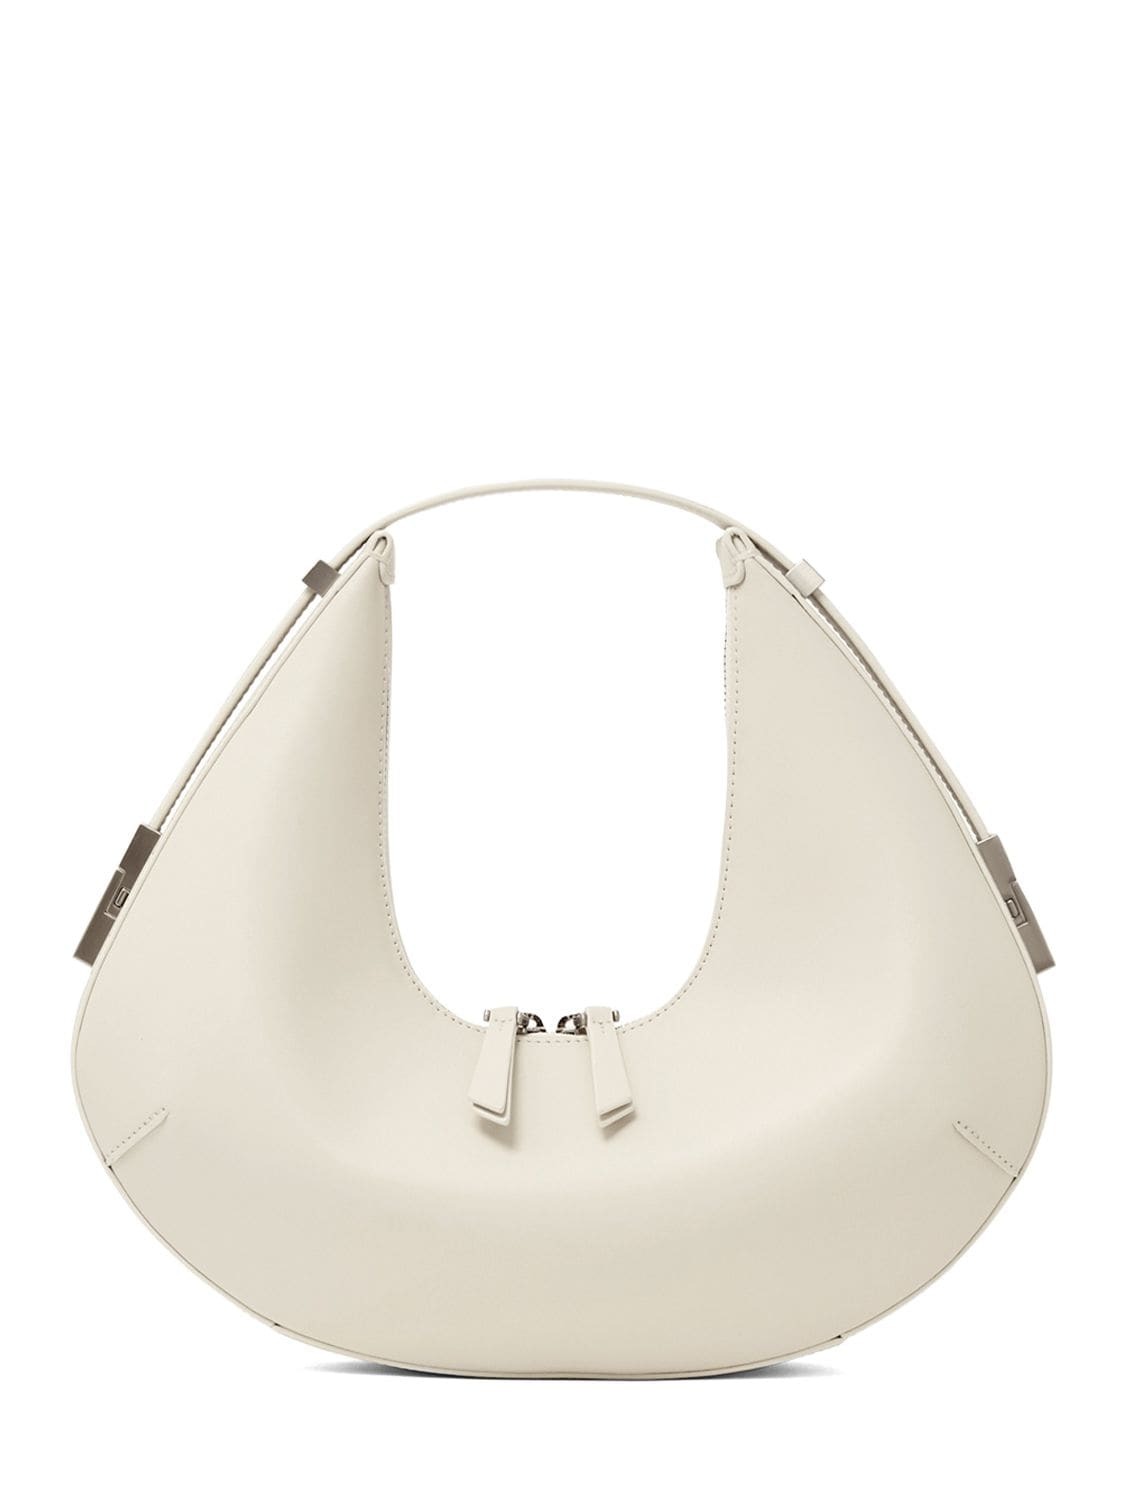 OSOI Toni Hobo Leather Shoulder Bag in cream